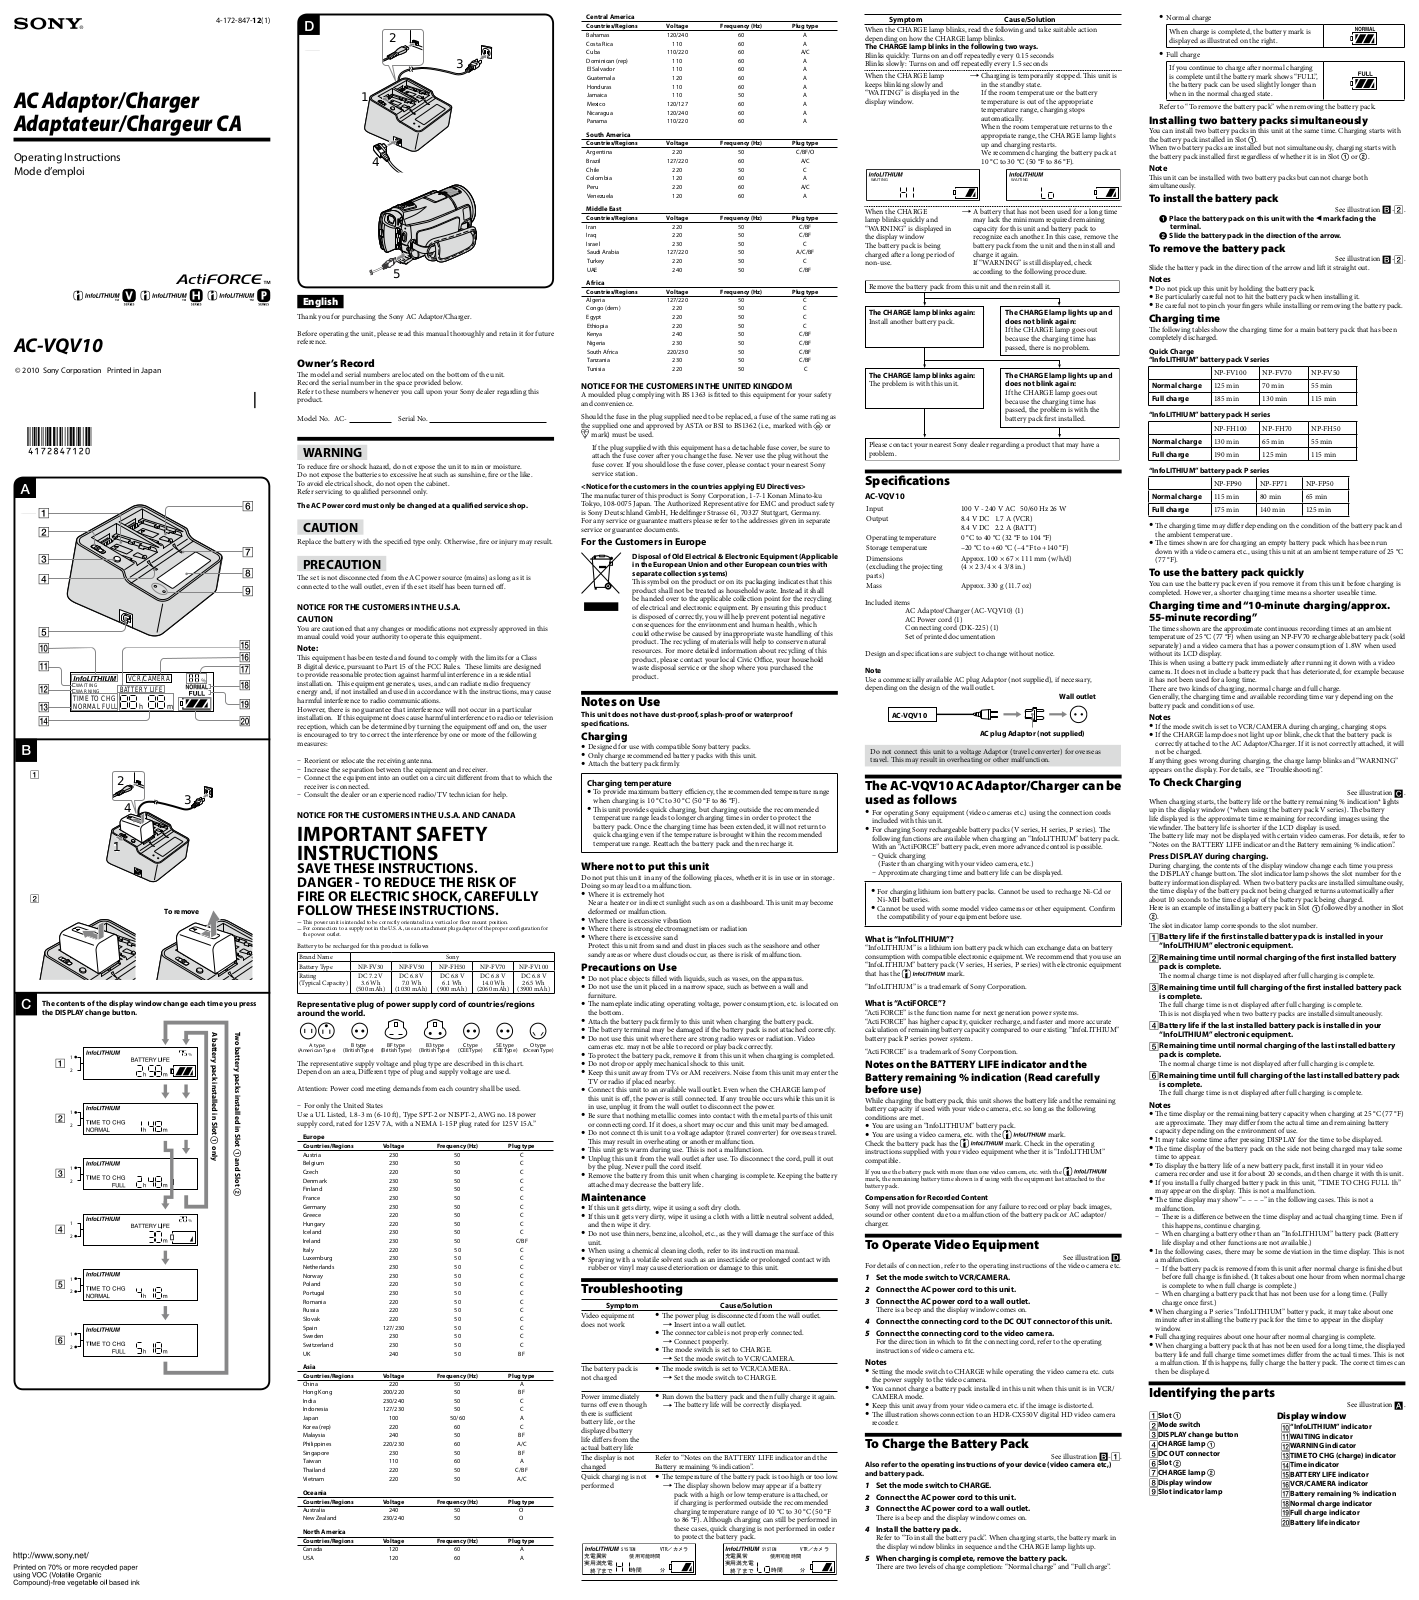 Sony AC-VQV10 User Manual